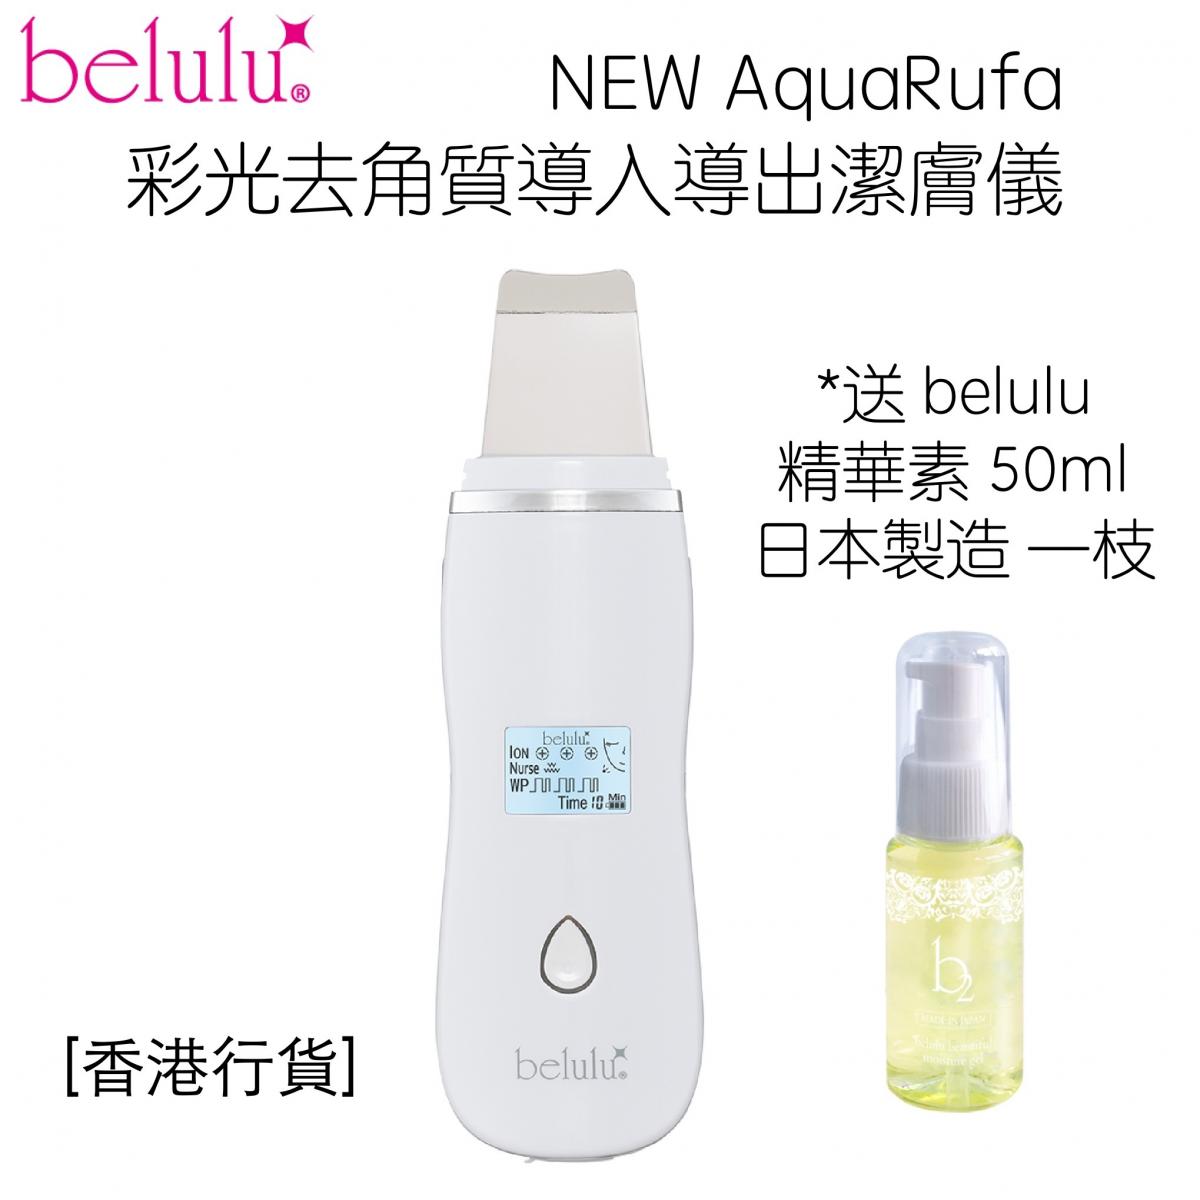 NEW AquaRufa IPL Exfoliating Import-Export Skin Cleanser (Made in Japan)